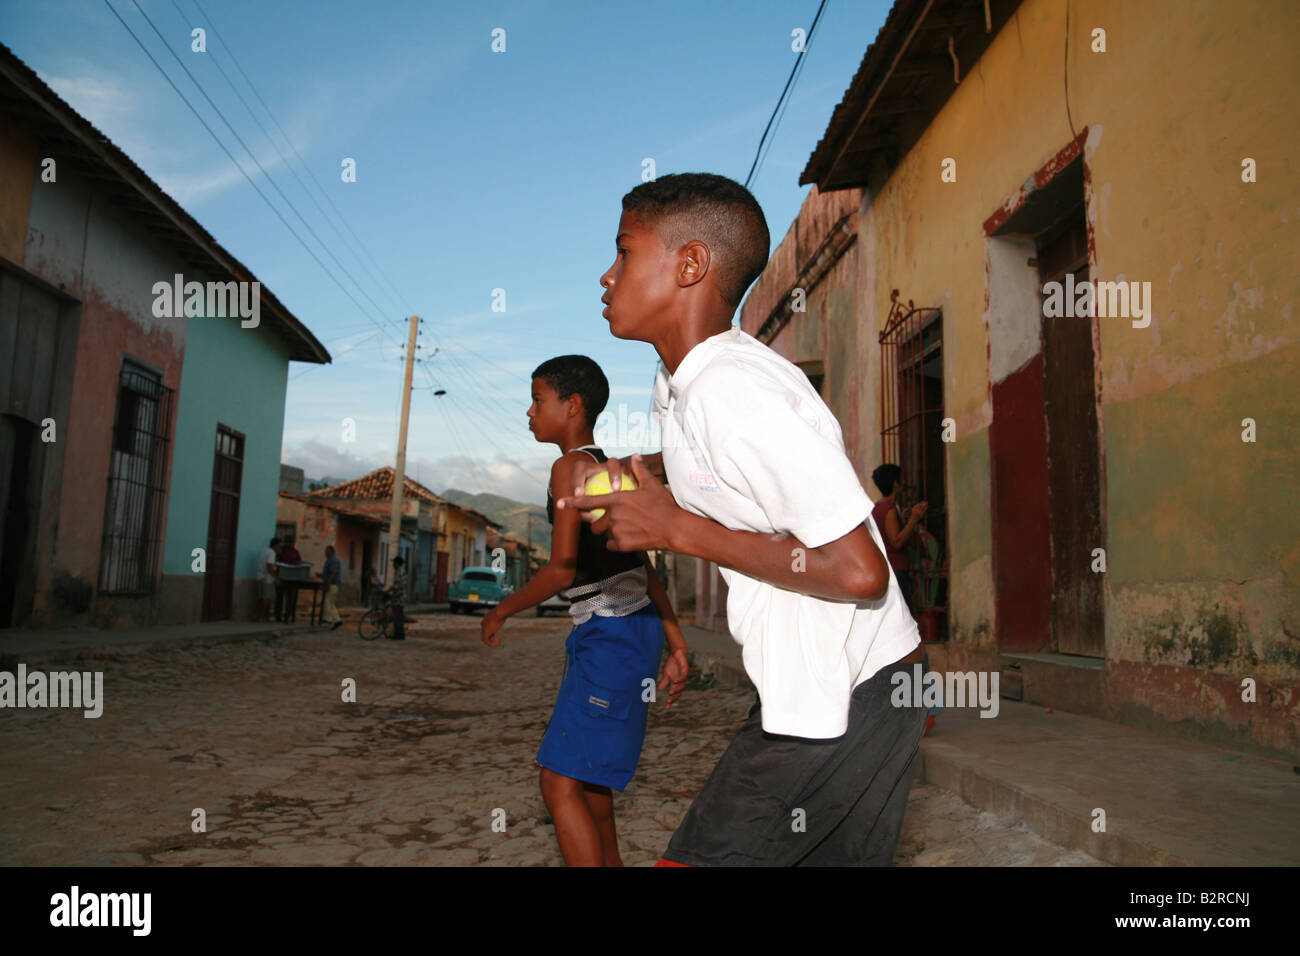 Children playing baseball on a street in Trinidad Sancti Spíritus Province Cuba Latin America Stock Photo